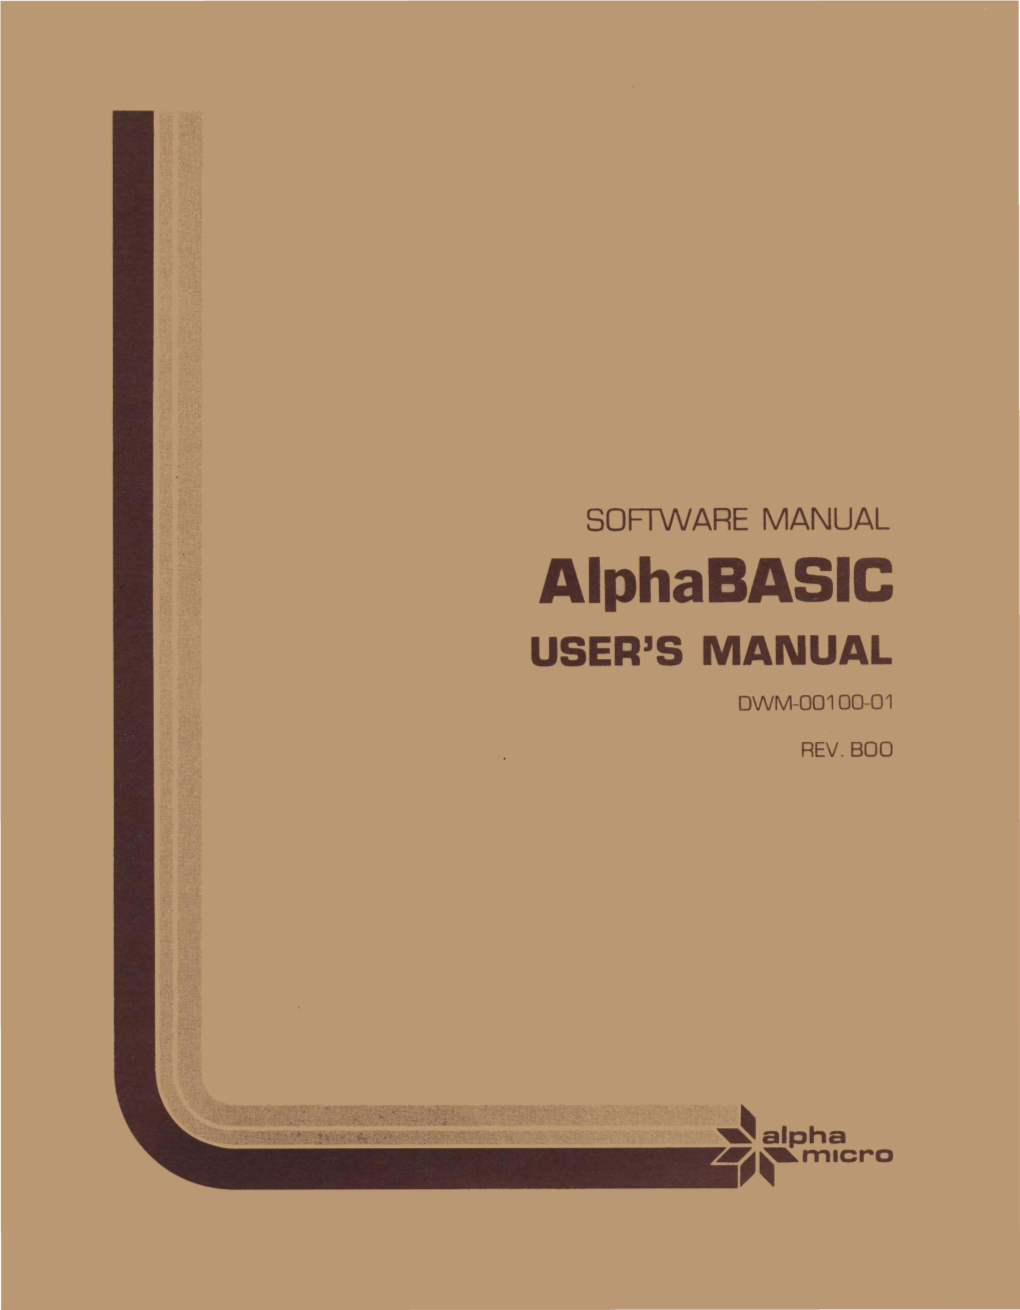 Alphabasic USER's MANUAL OWM-00100-01